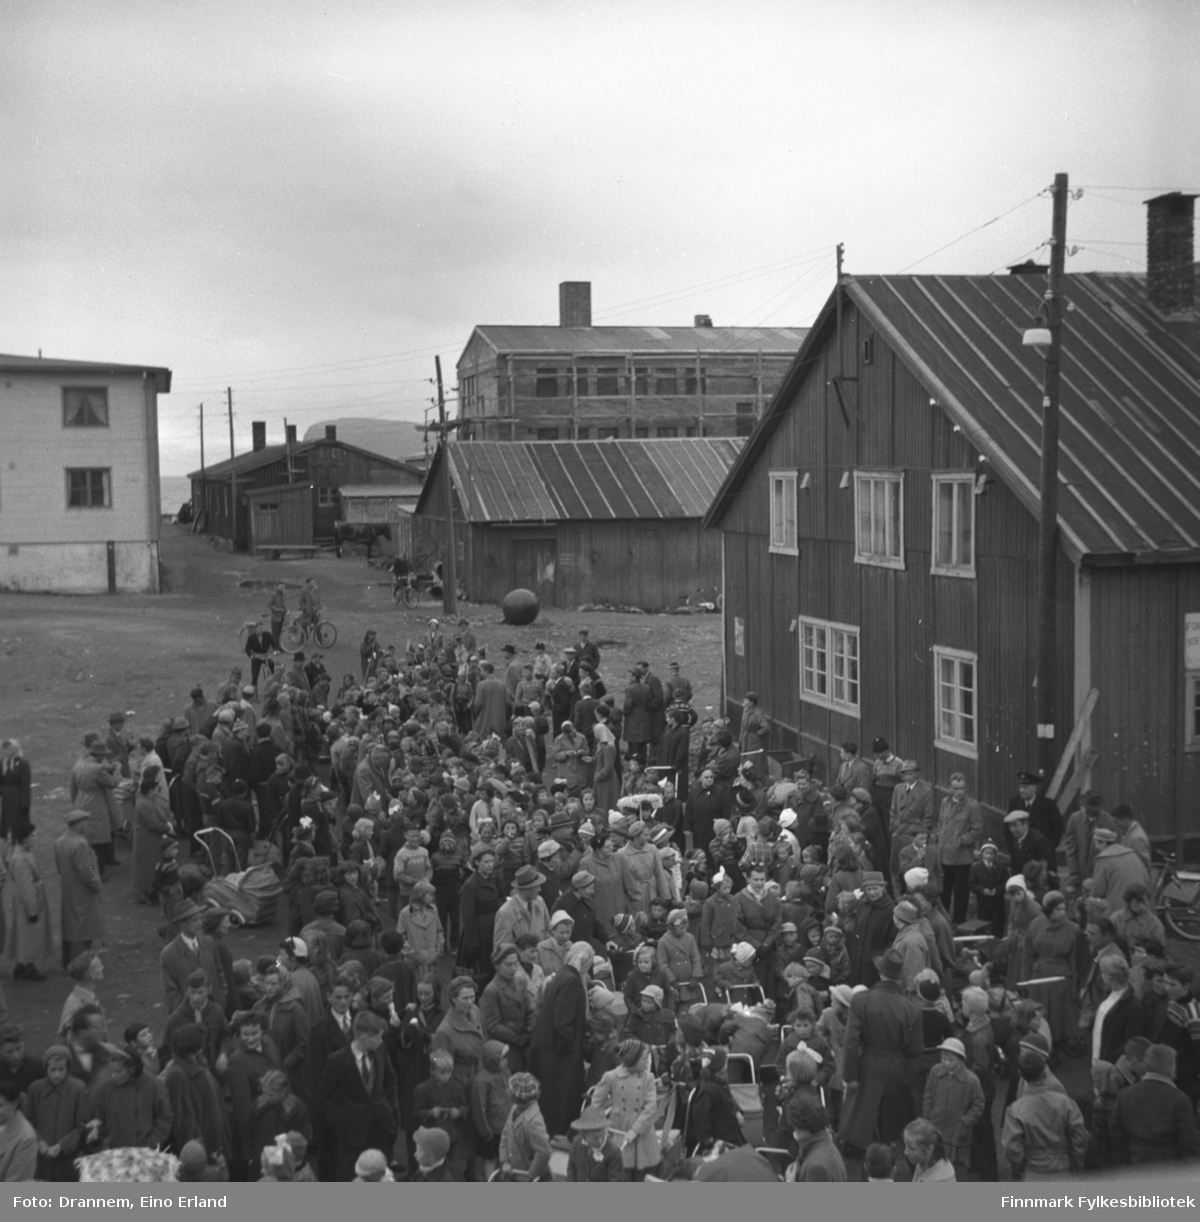 Masse folk samlet i Hammerfest sentrum (Barnas dag)